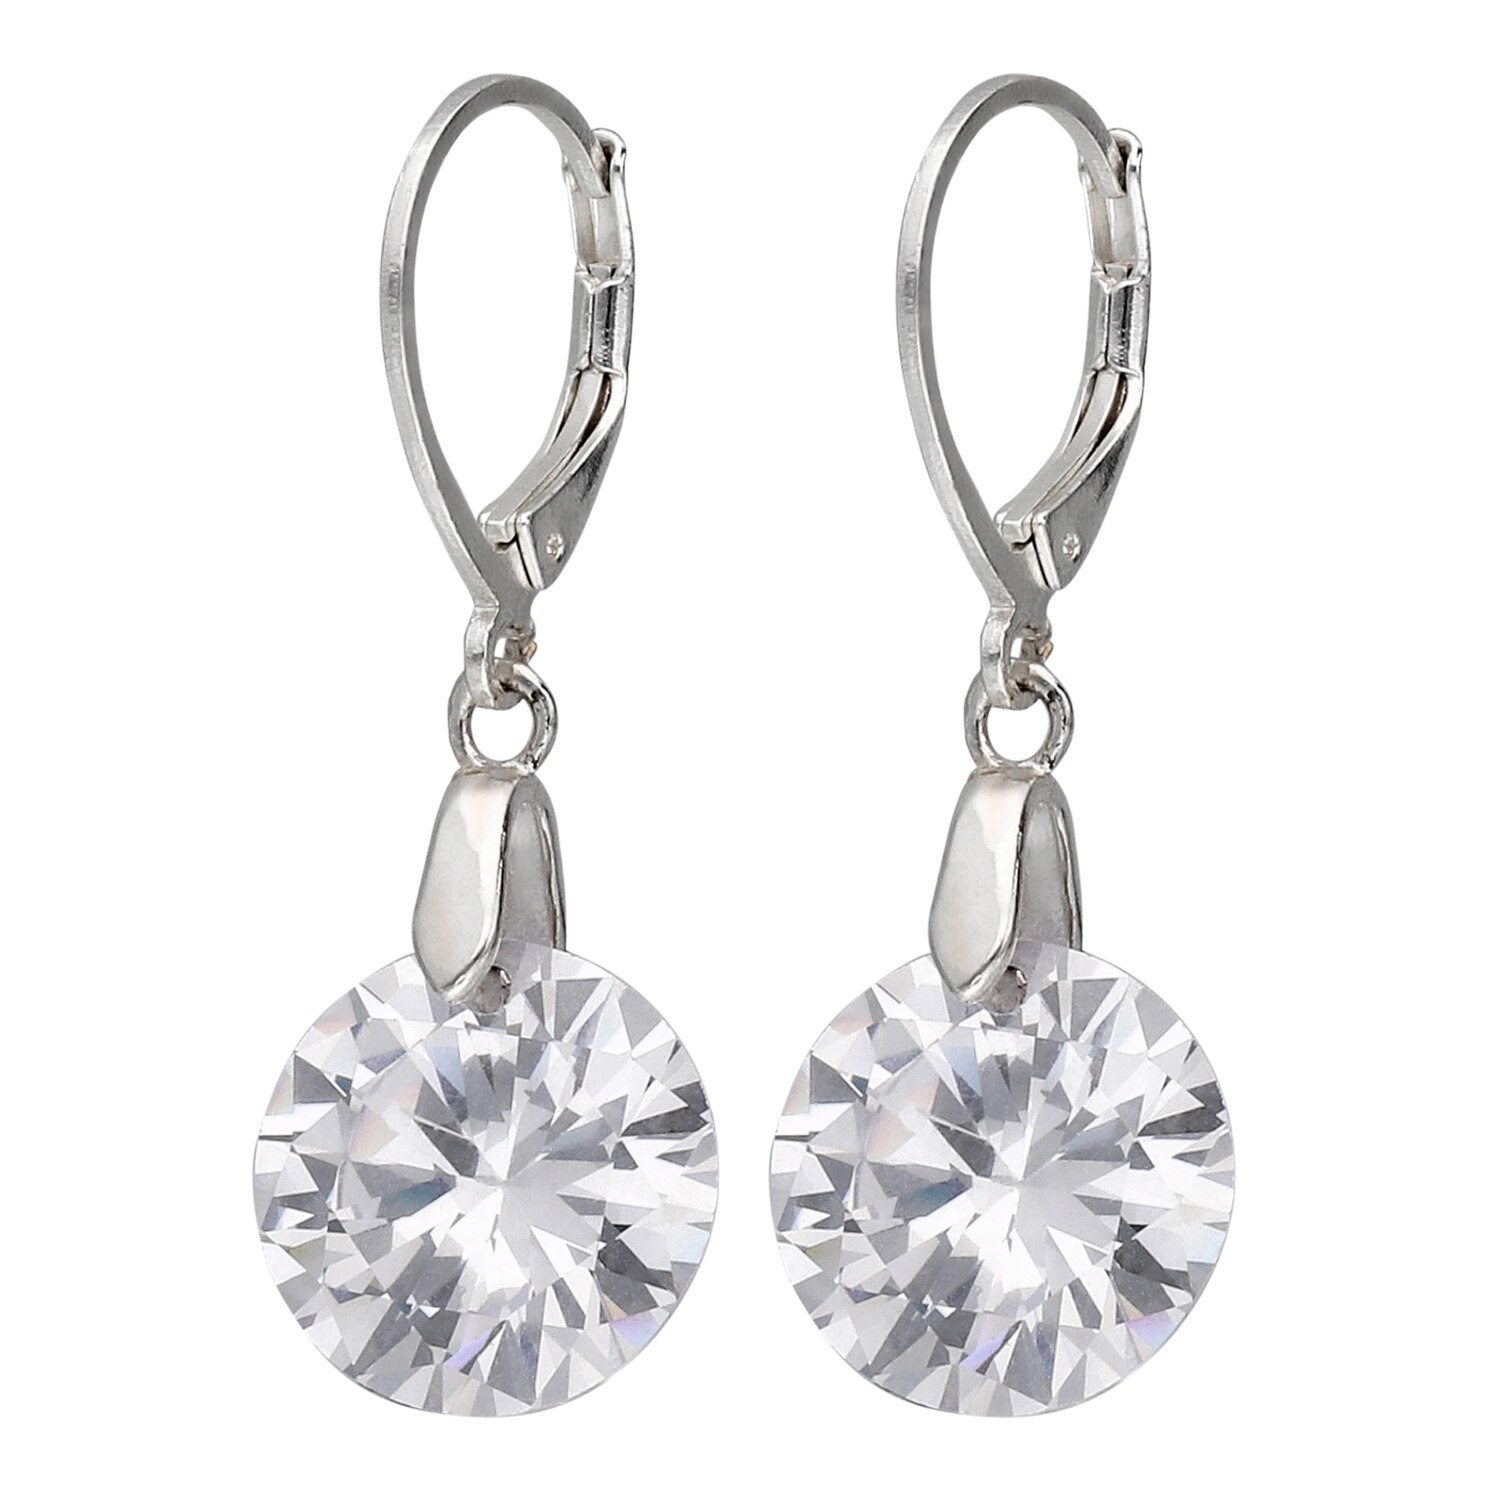 I AM Jewelry Fashion Zirconia Stone Earrings, 2CT , CVS